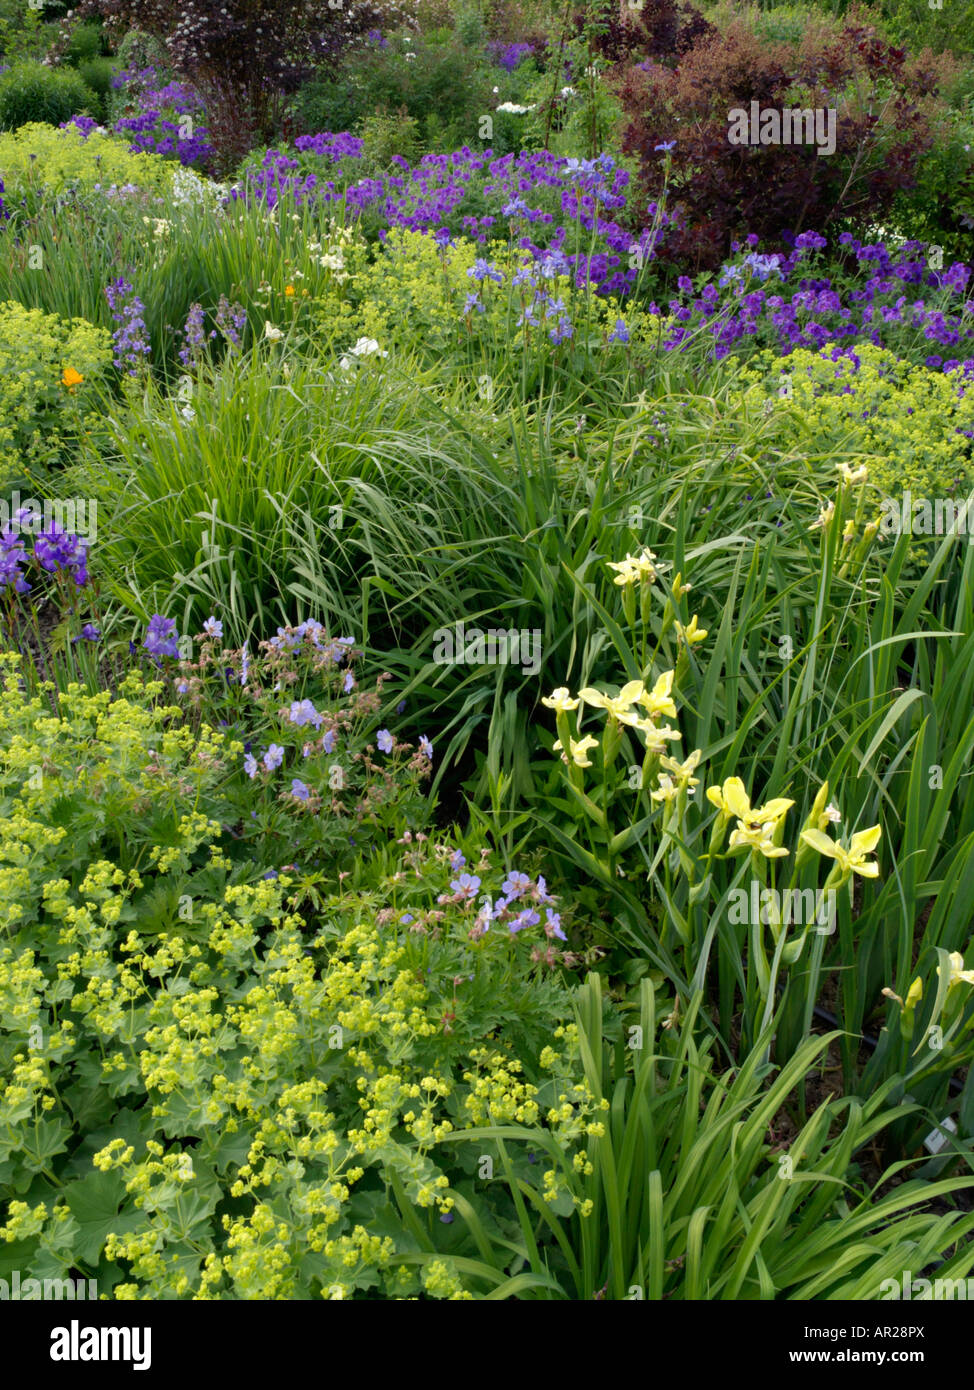 Flag iris (Iris pseudacorus), lady's mantle (Alchemilla mollis) and cranesbill (Geranium x magnificum) Stock Photo